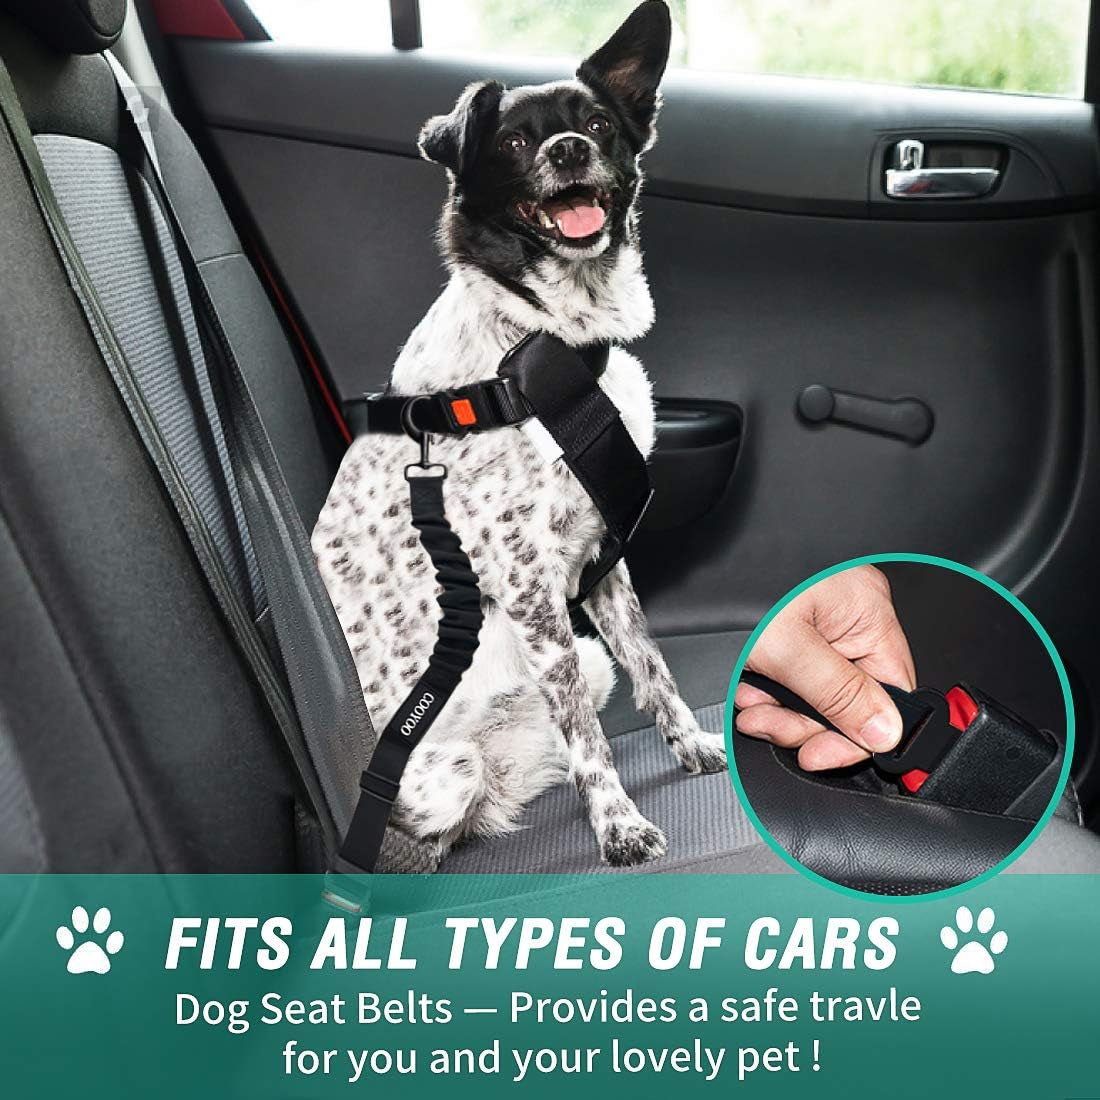 Retractable Dog Seat Belt Set: Adjustable, Heavy-Duty Nylon for Pet Safety